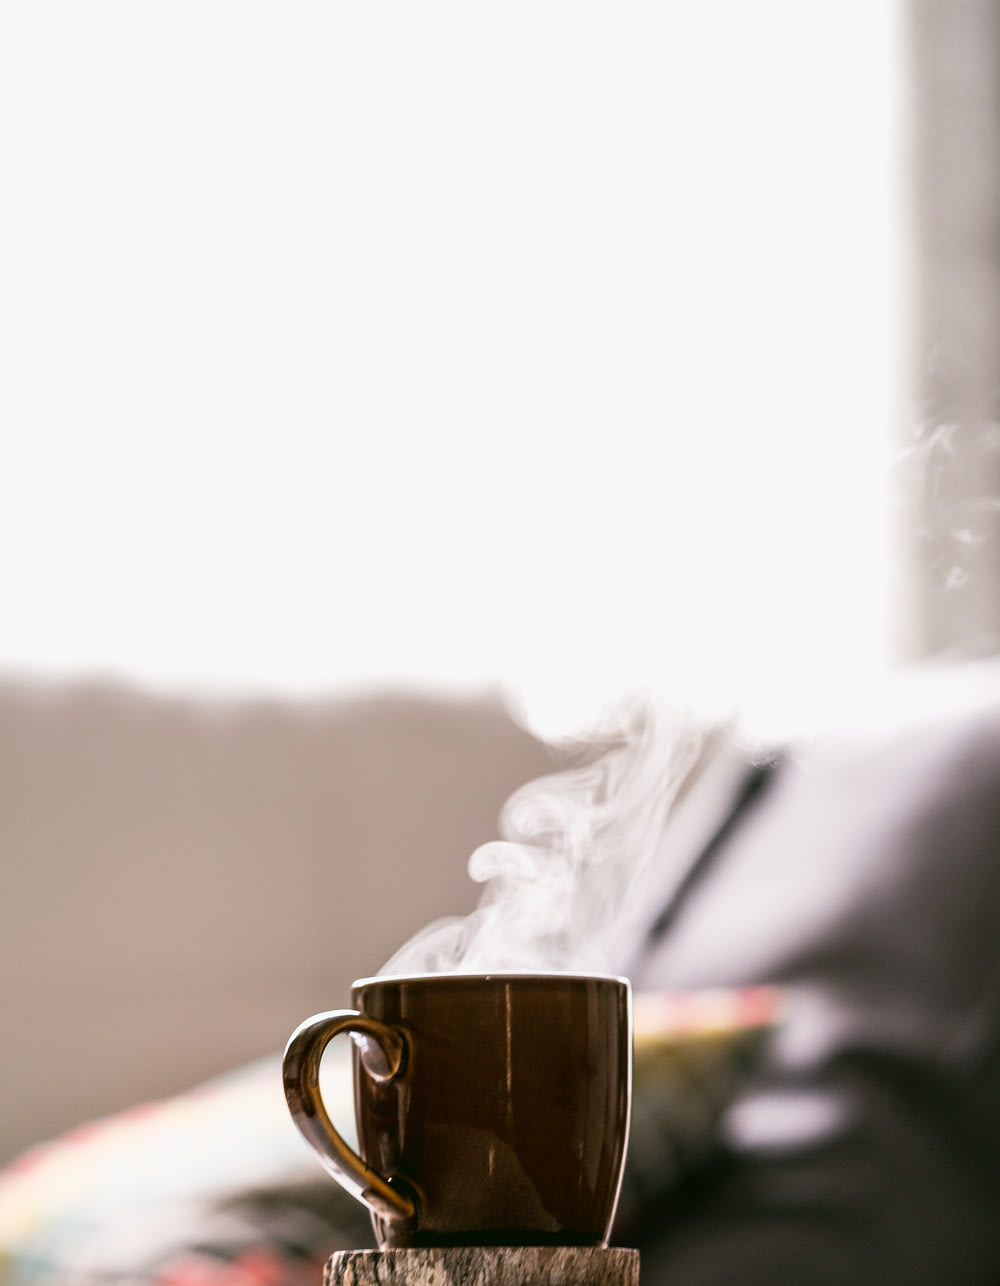 Fotografía de enfoque superficial de café caliente en taza con platillo